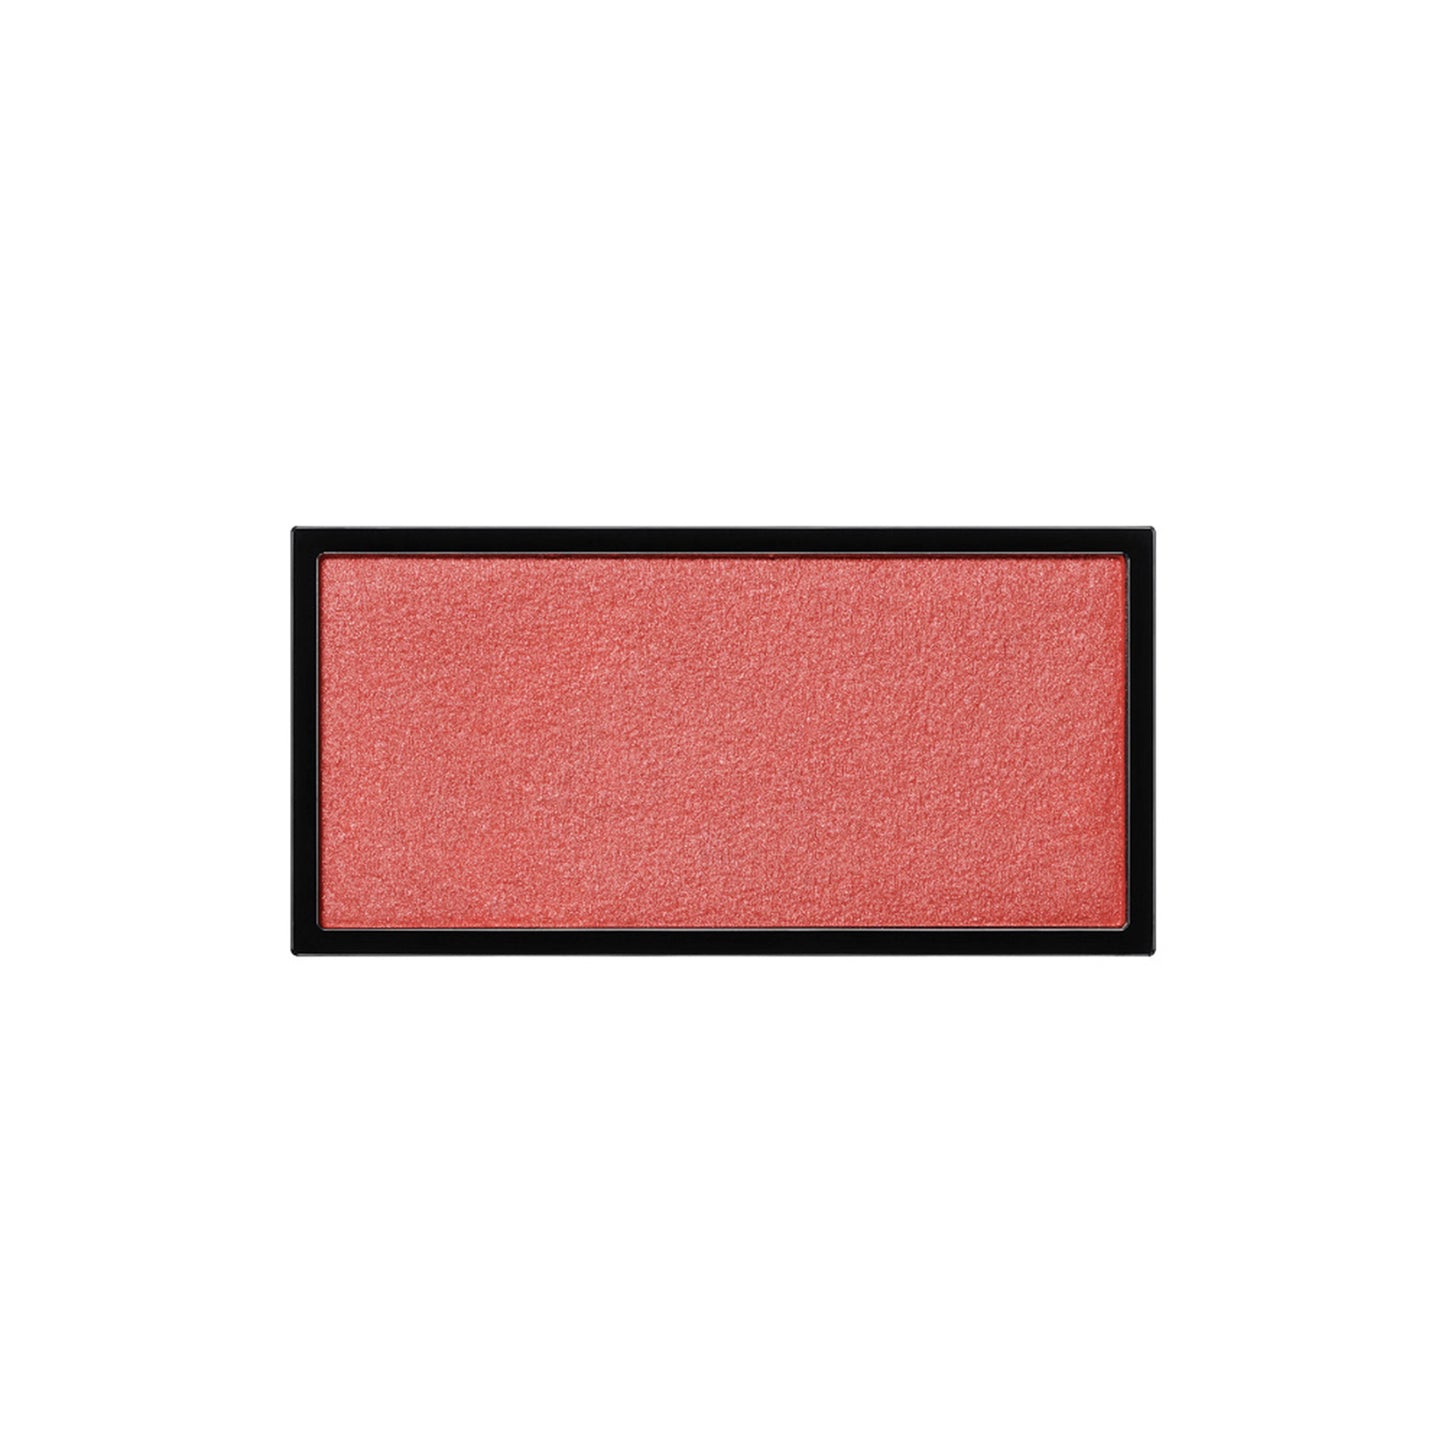 A rectangle shaped powder blush pan in a dirty orange tone